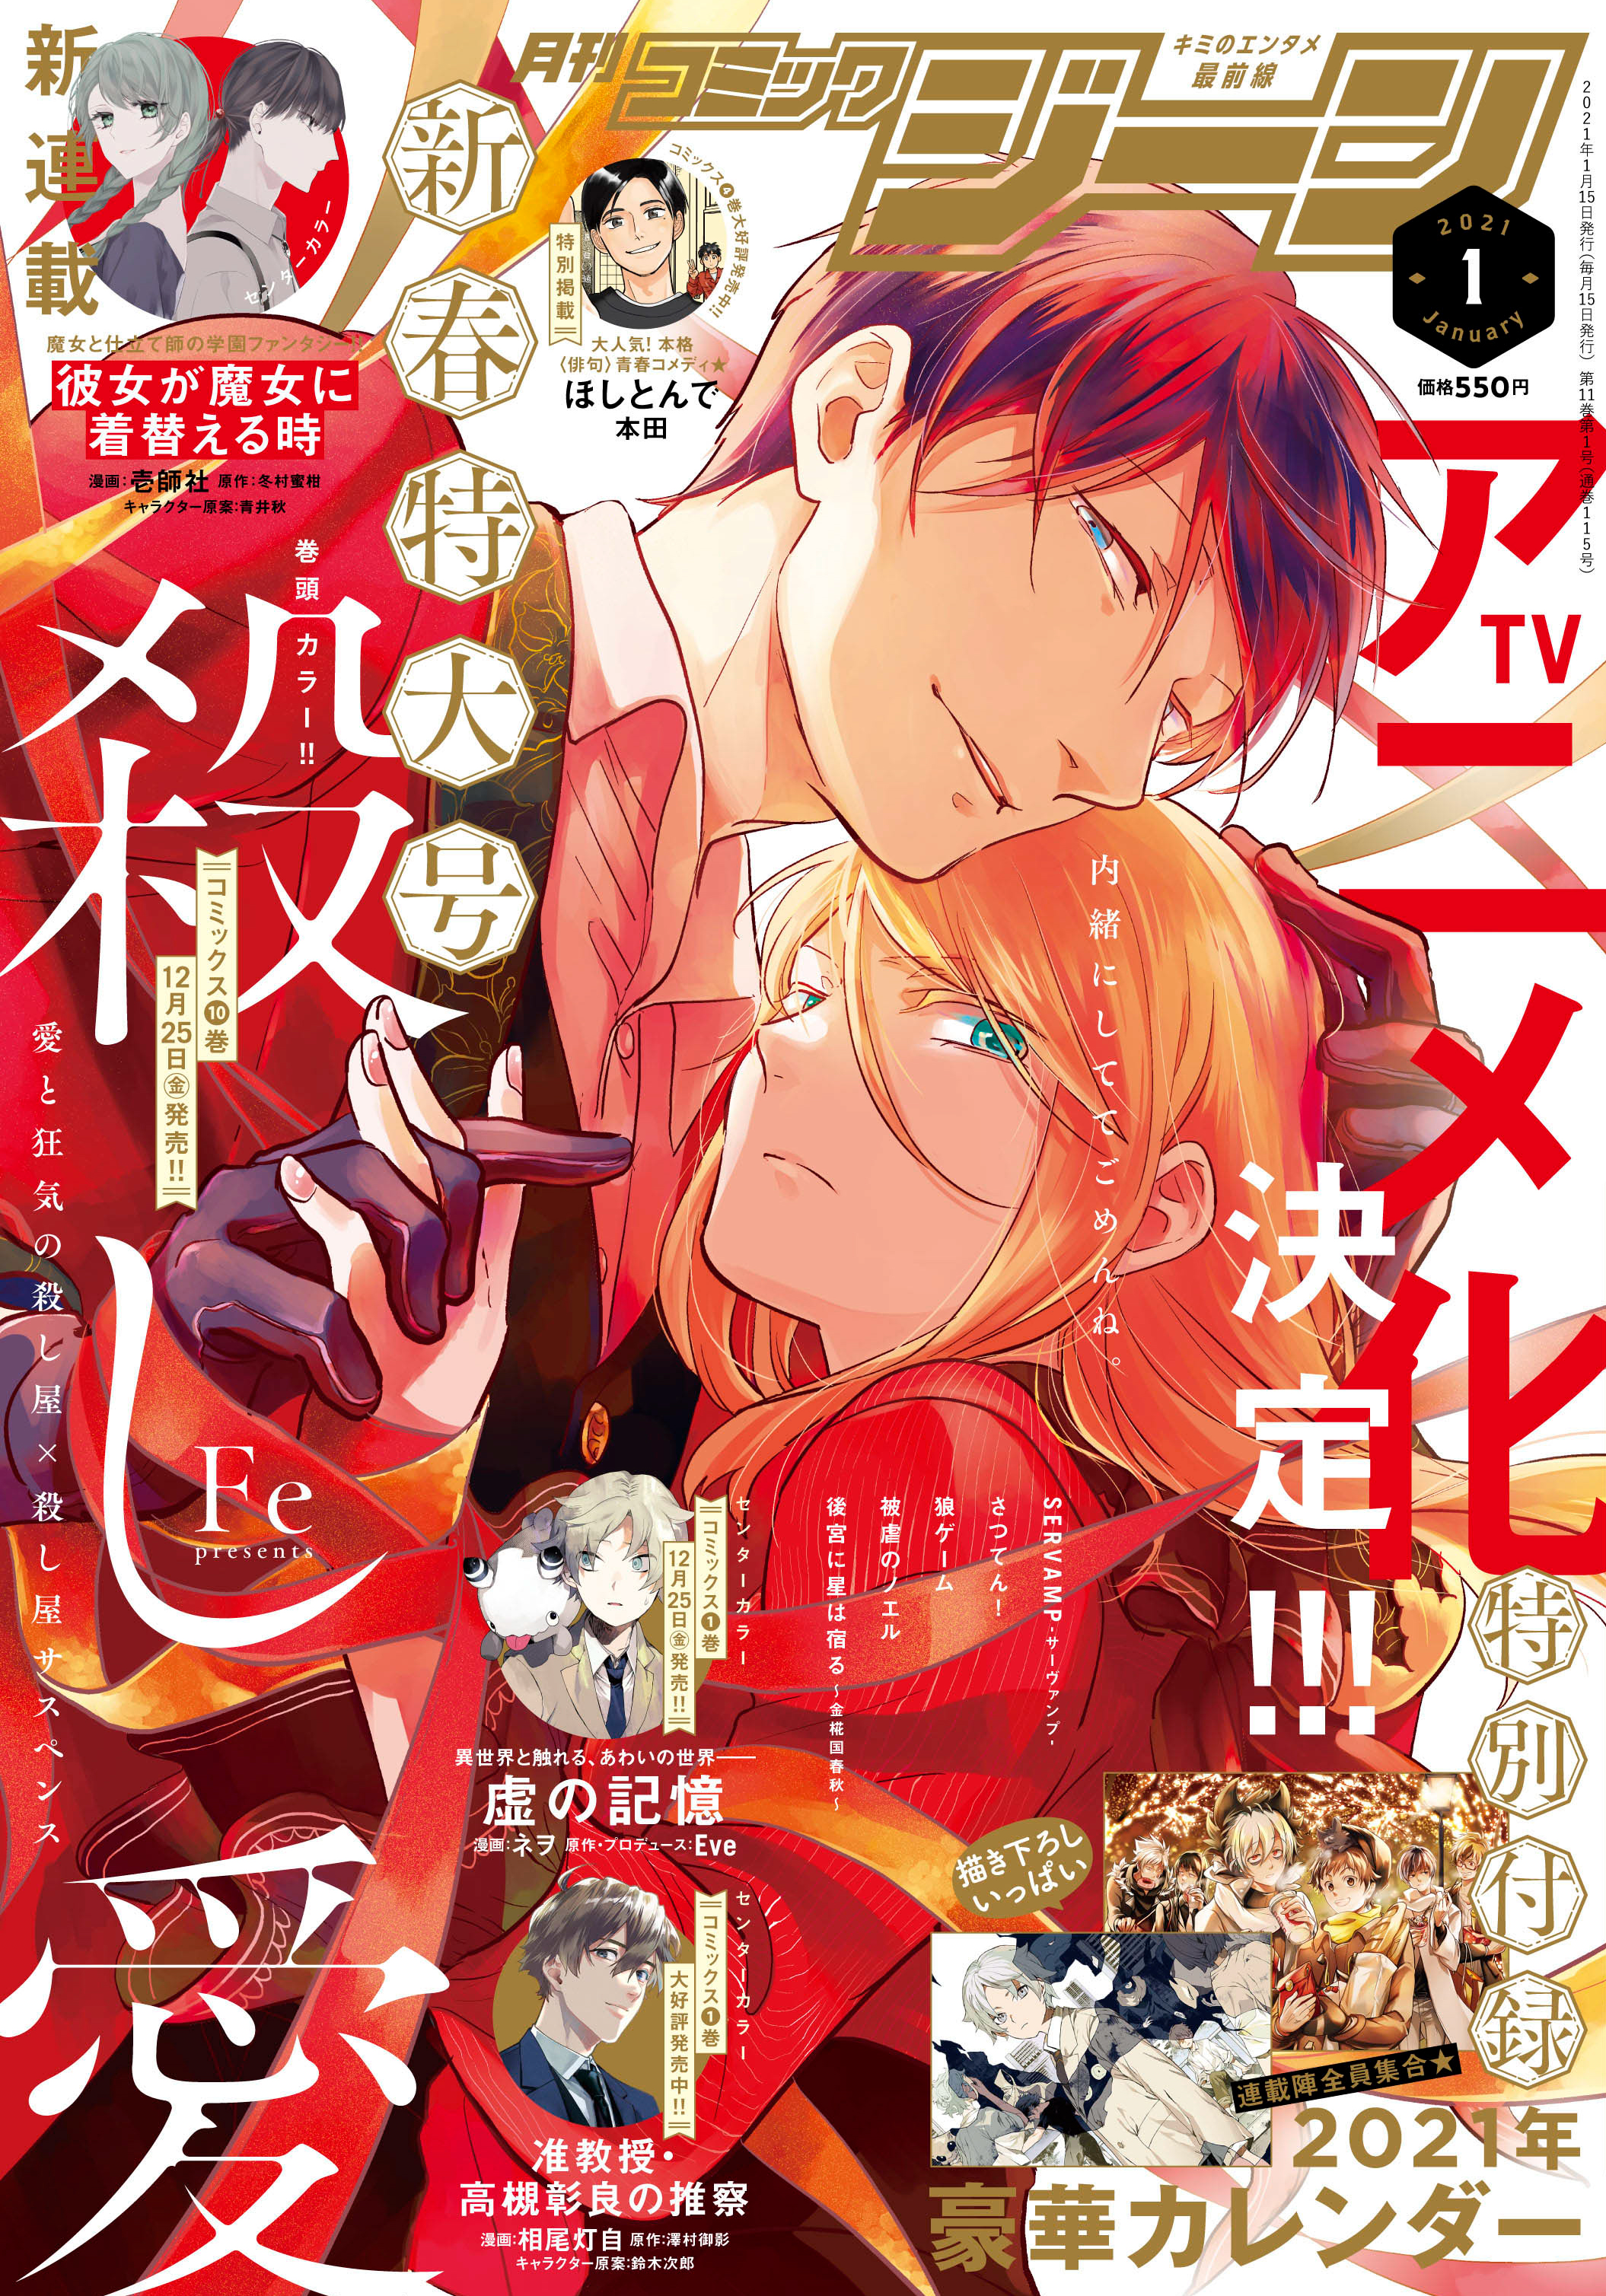 MyAnimeList on X: Koroshi Ai (Love of Kill) josei action manga